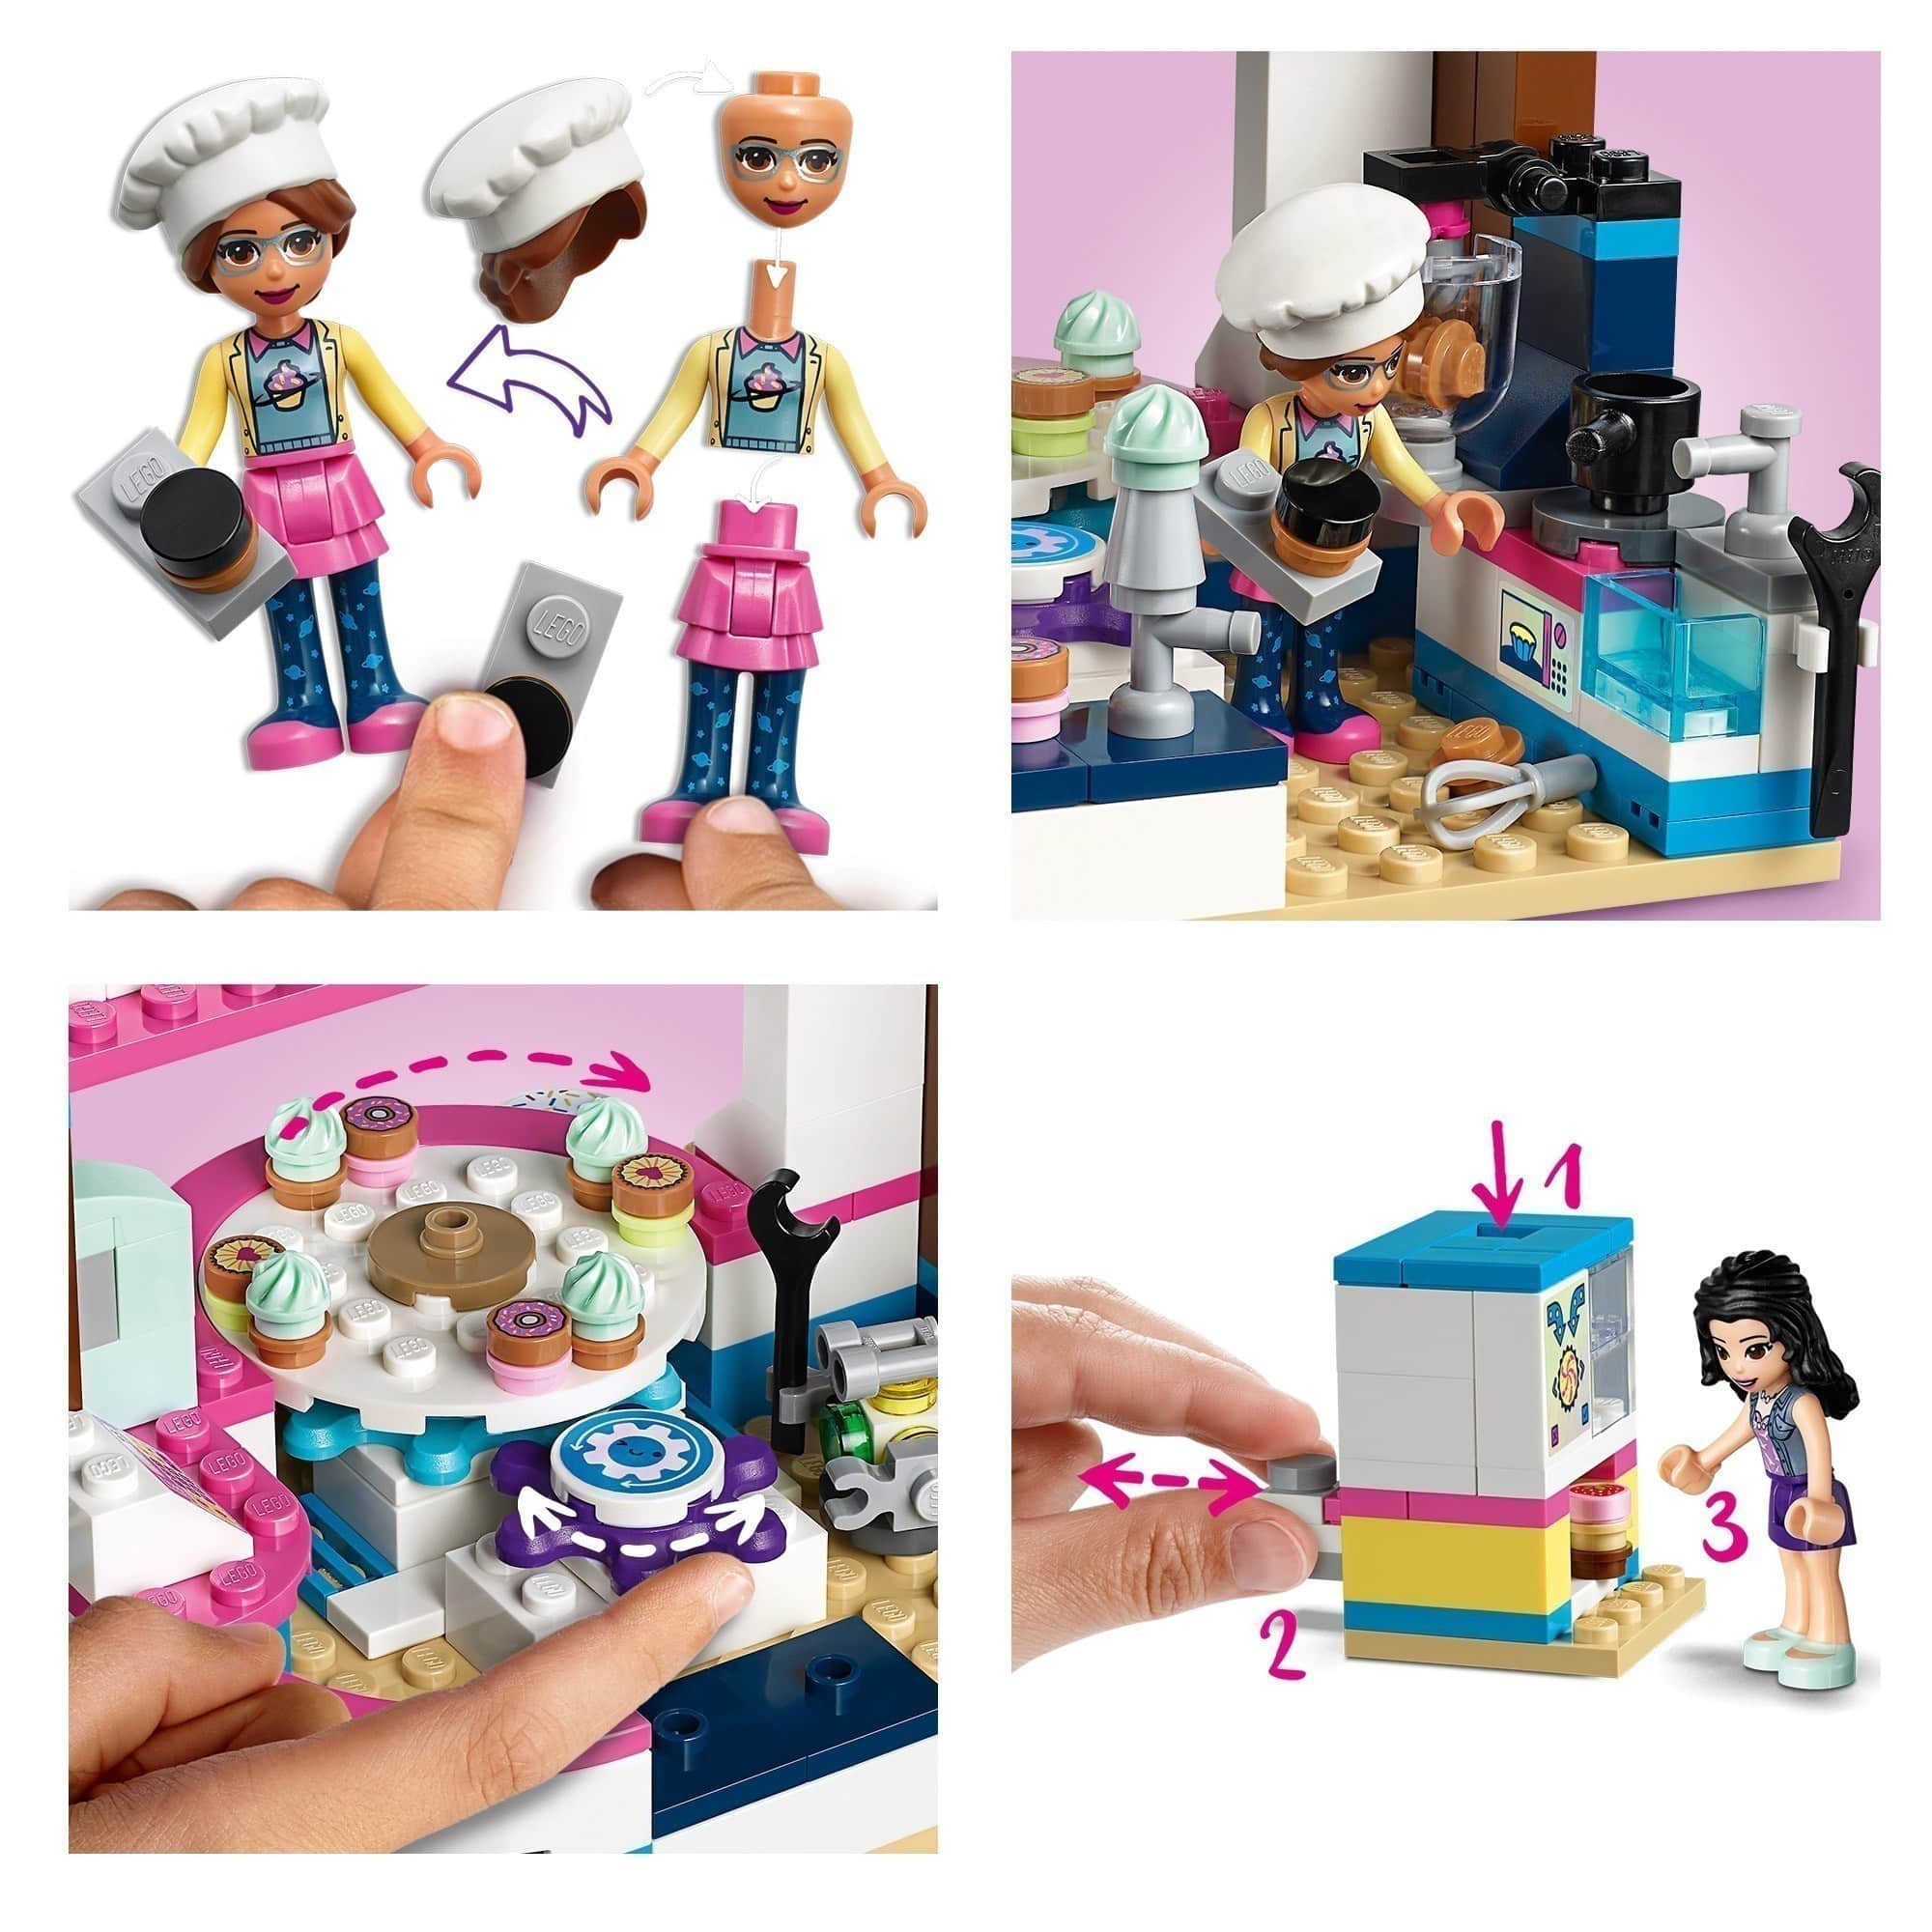 LEGO® Friends™ 41366 - Olivia's Cupcake Cafe